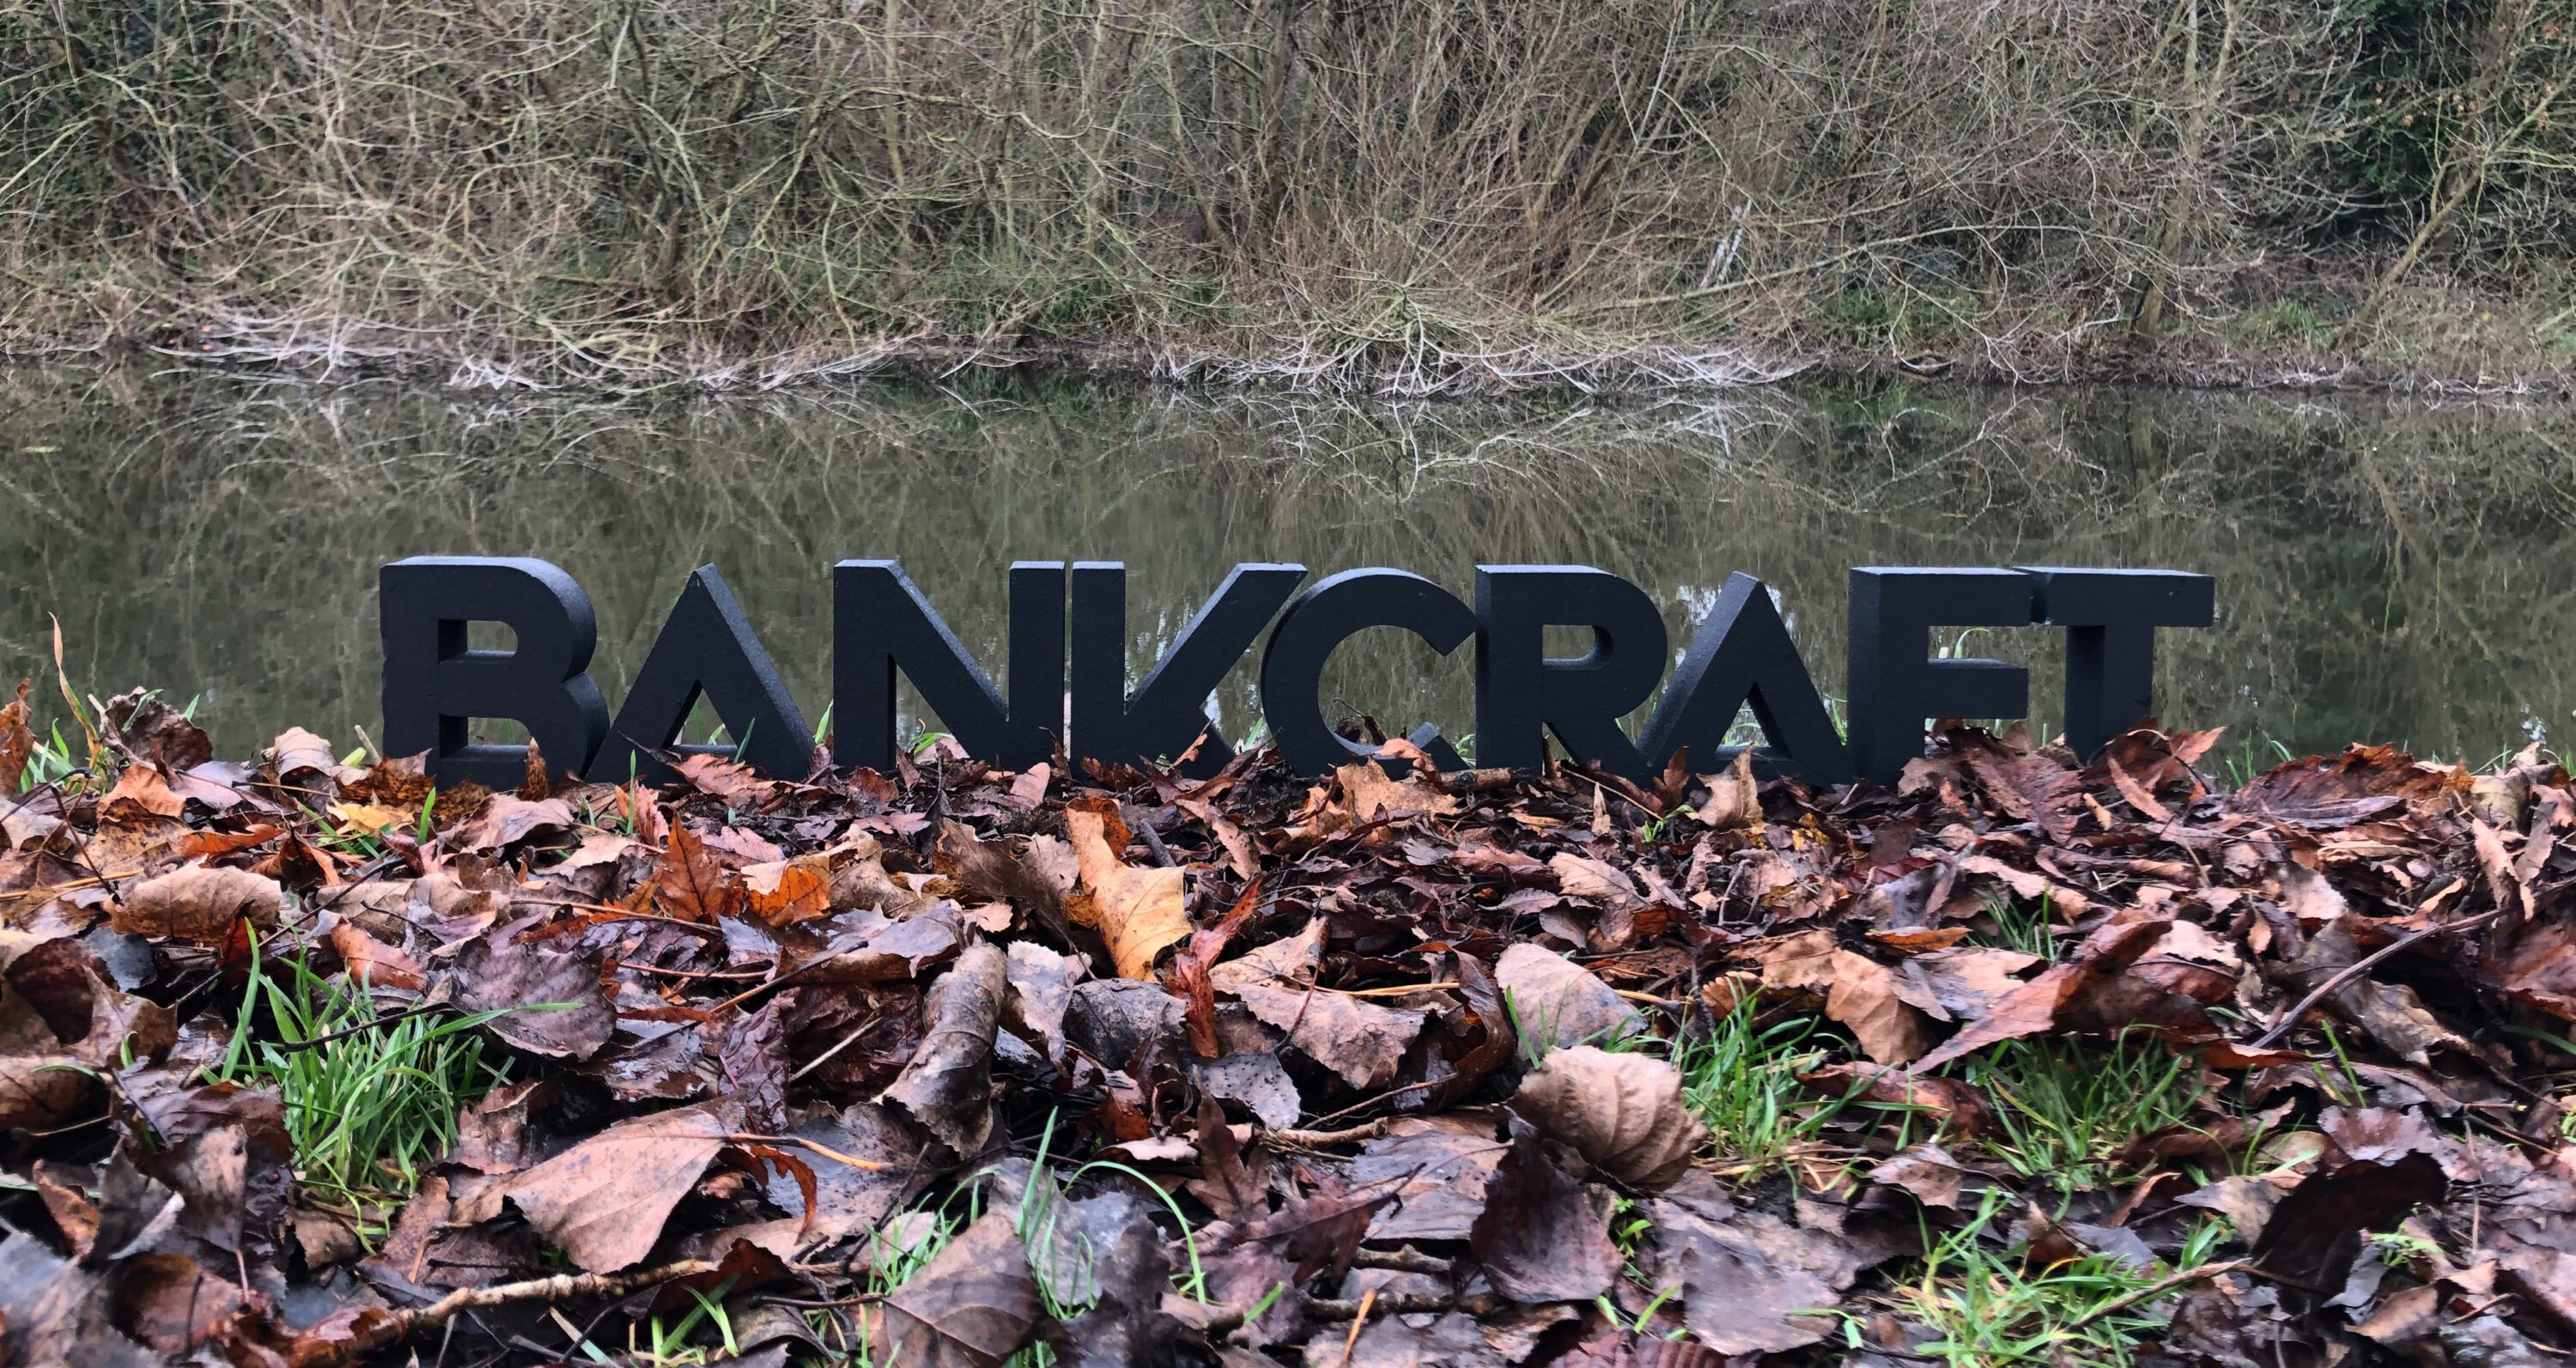 Bankcraft brand design